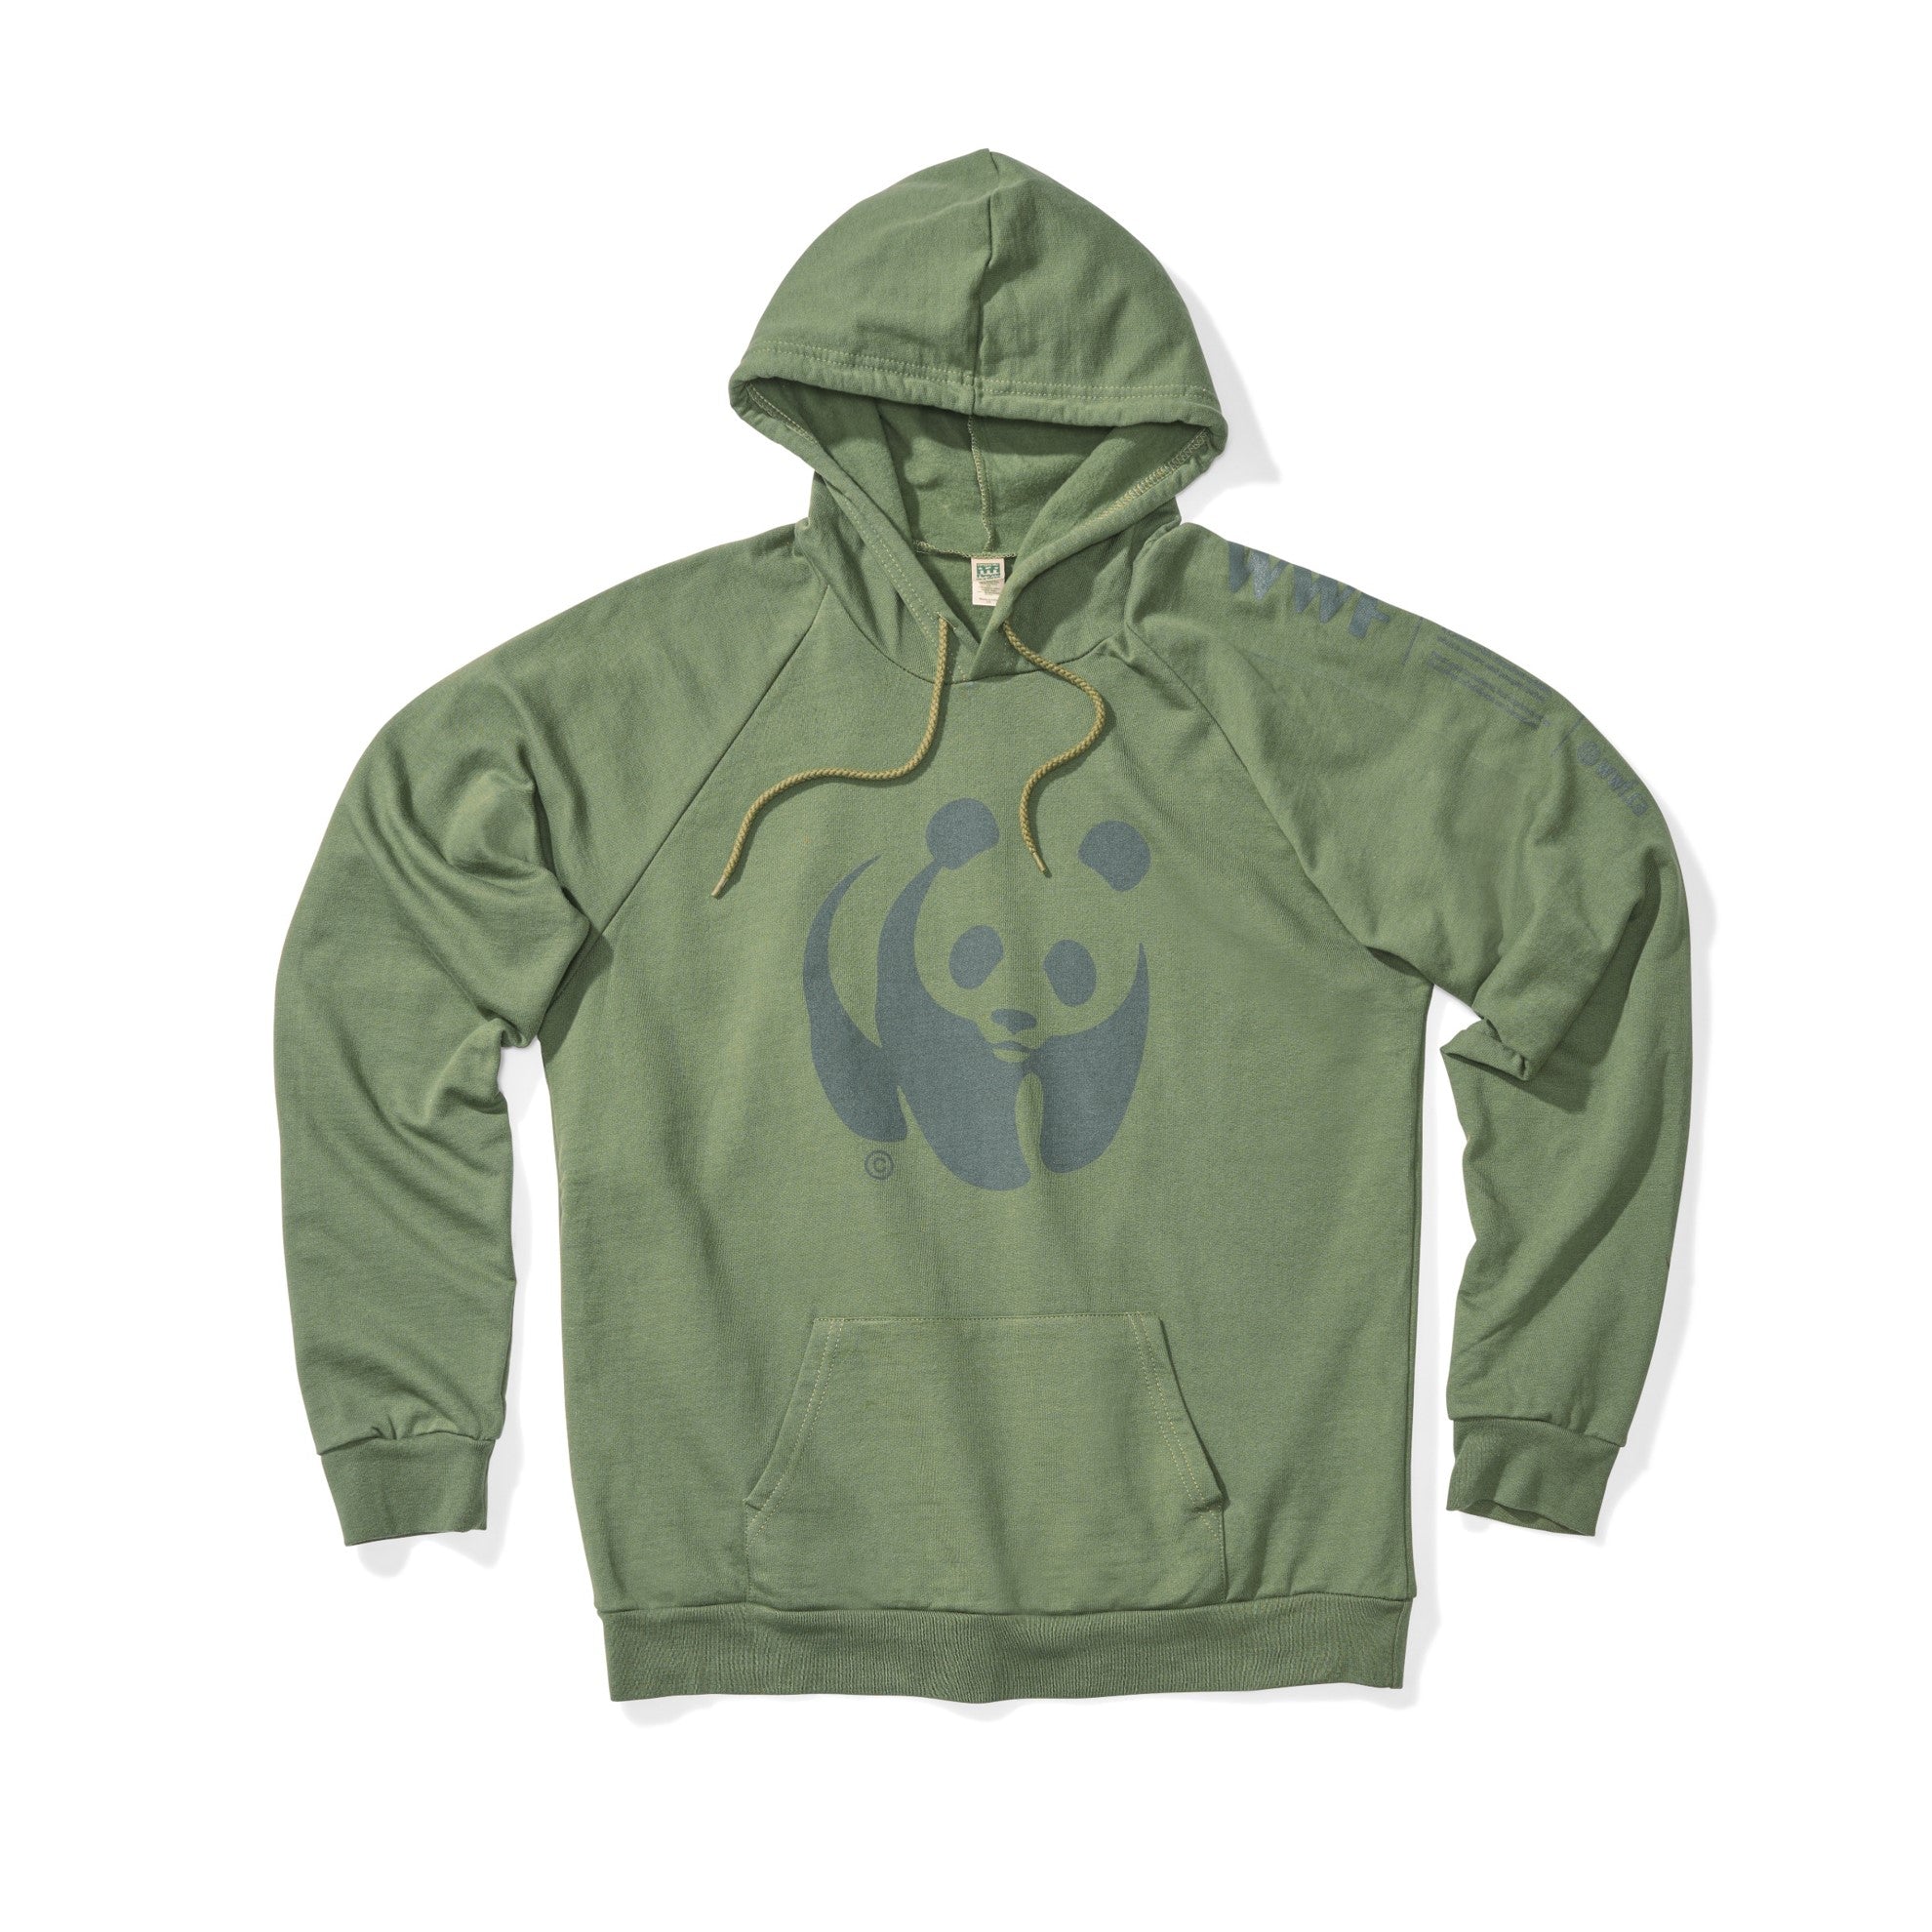 Unisex olive green hooded sweatshirt - WWF-Canada